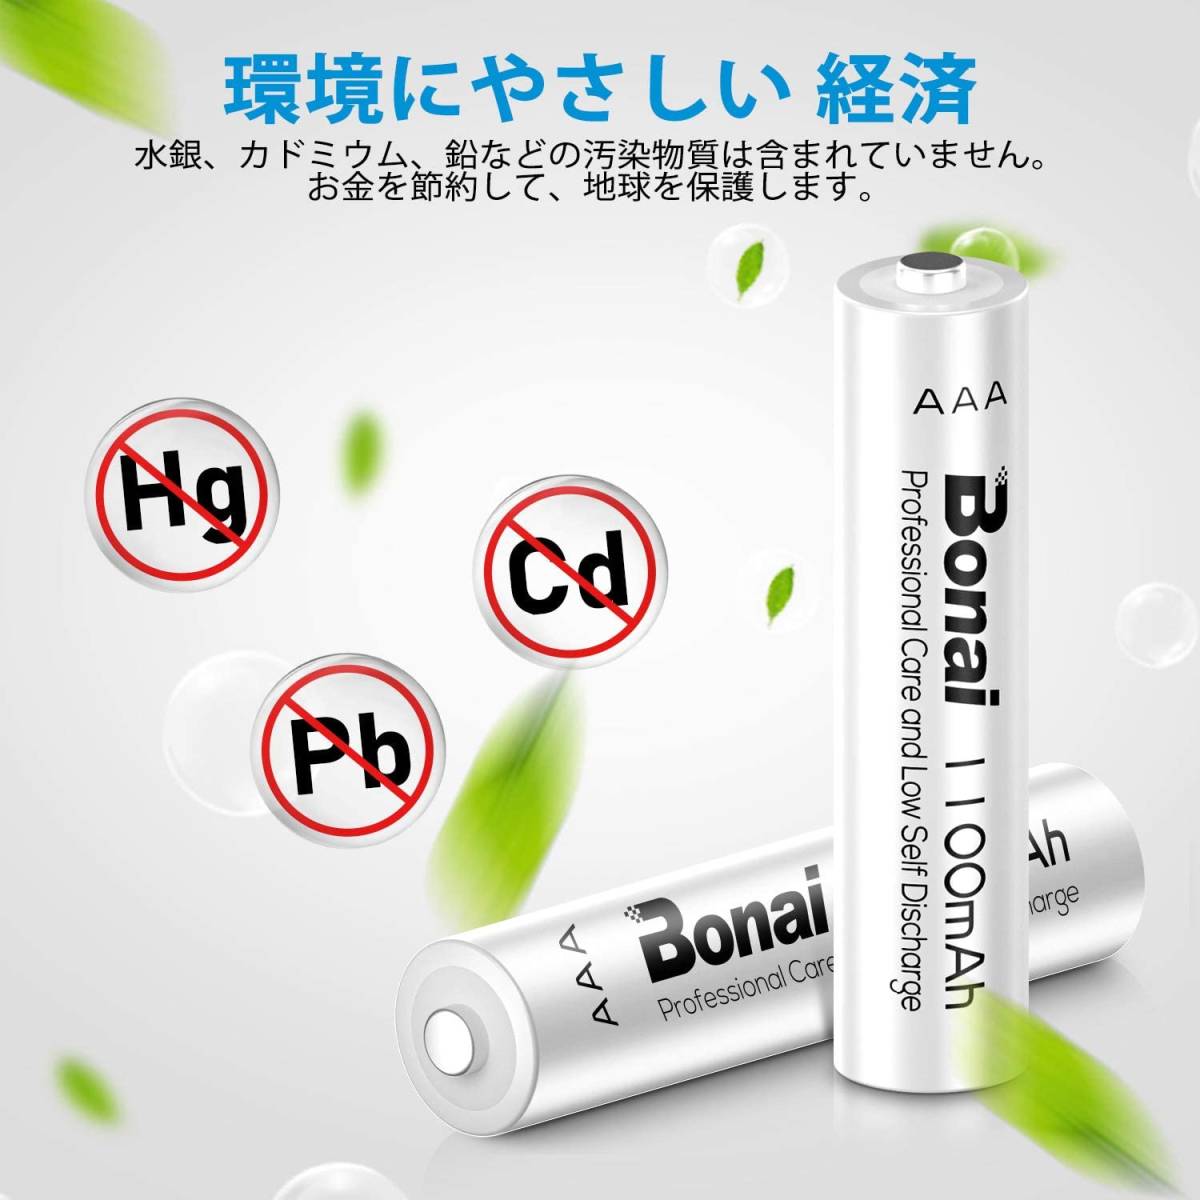 BONAI 単4形 充電式電池 ニッケル水素電池 8個パックCEマーキング取得 UL認証済み 自然放電抑制 液漏れ防止設計 環境友_画像5